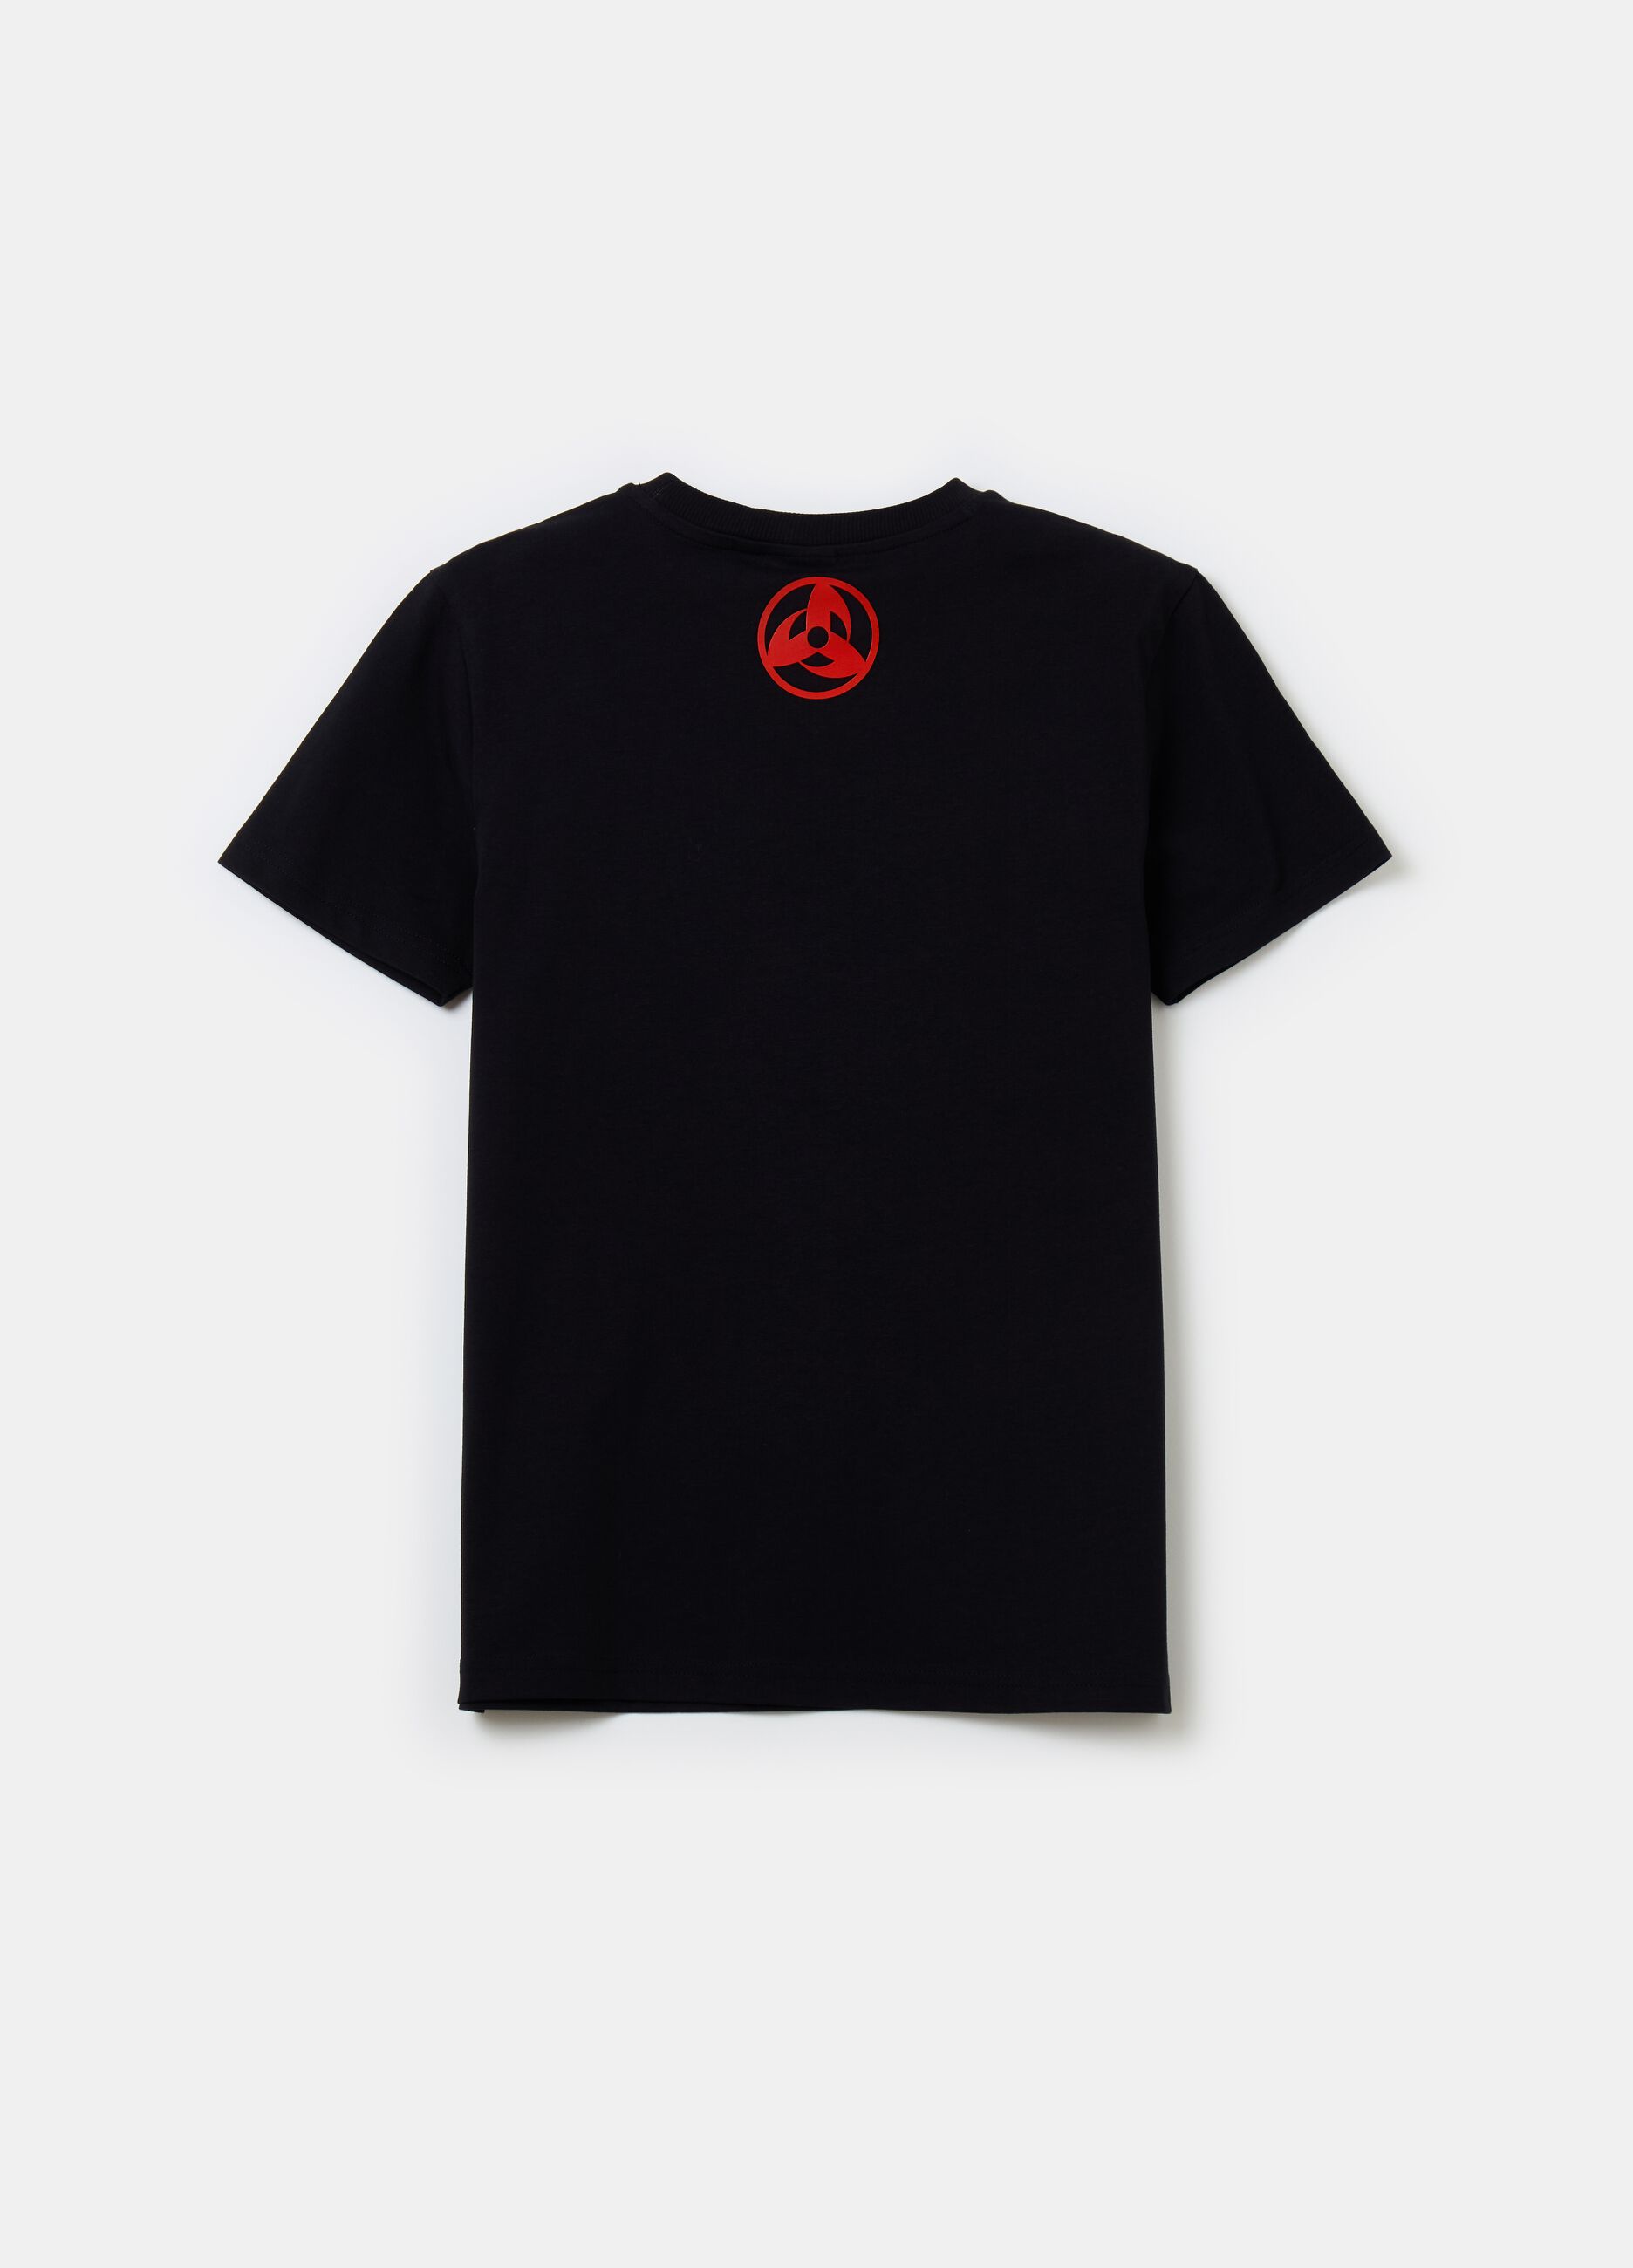 Cotton T-shirt with Naruto print